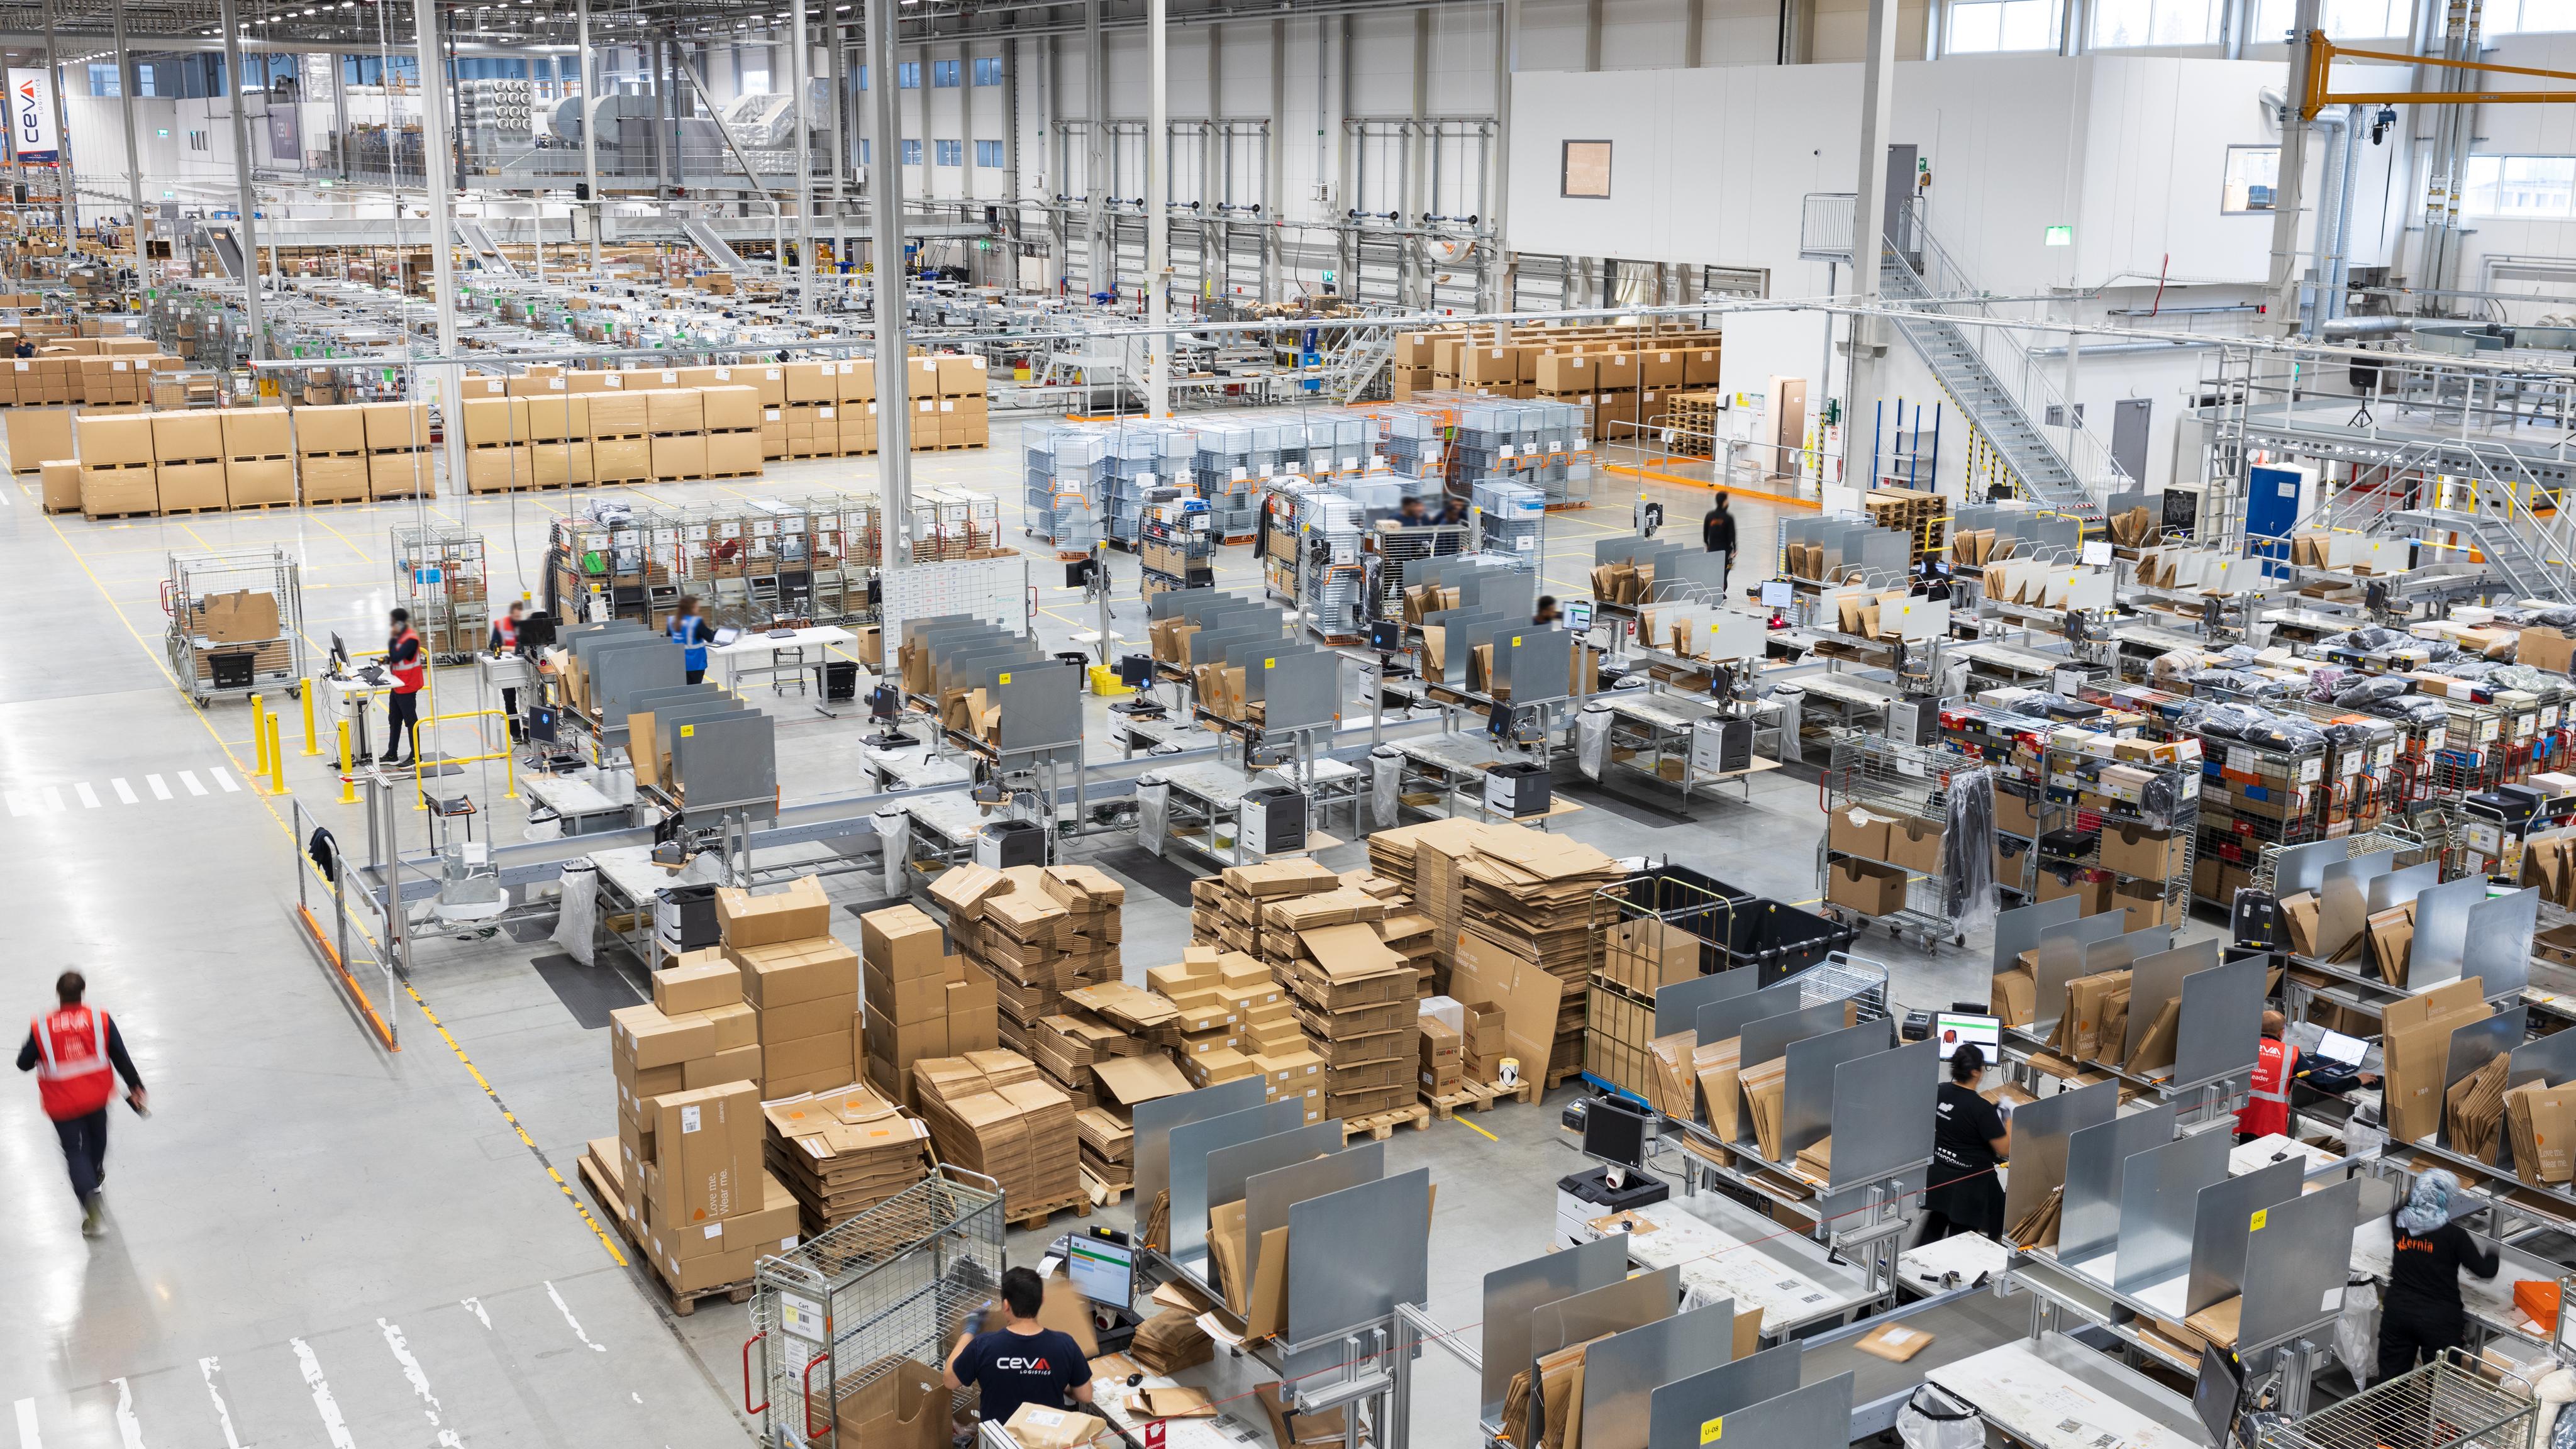 Here is Zalando’s e-commerce warehouse in Stockholm